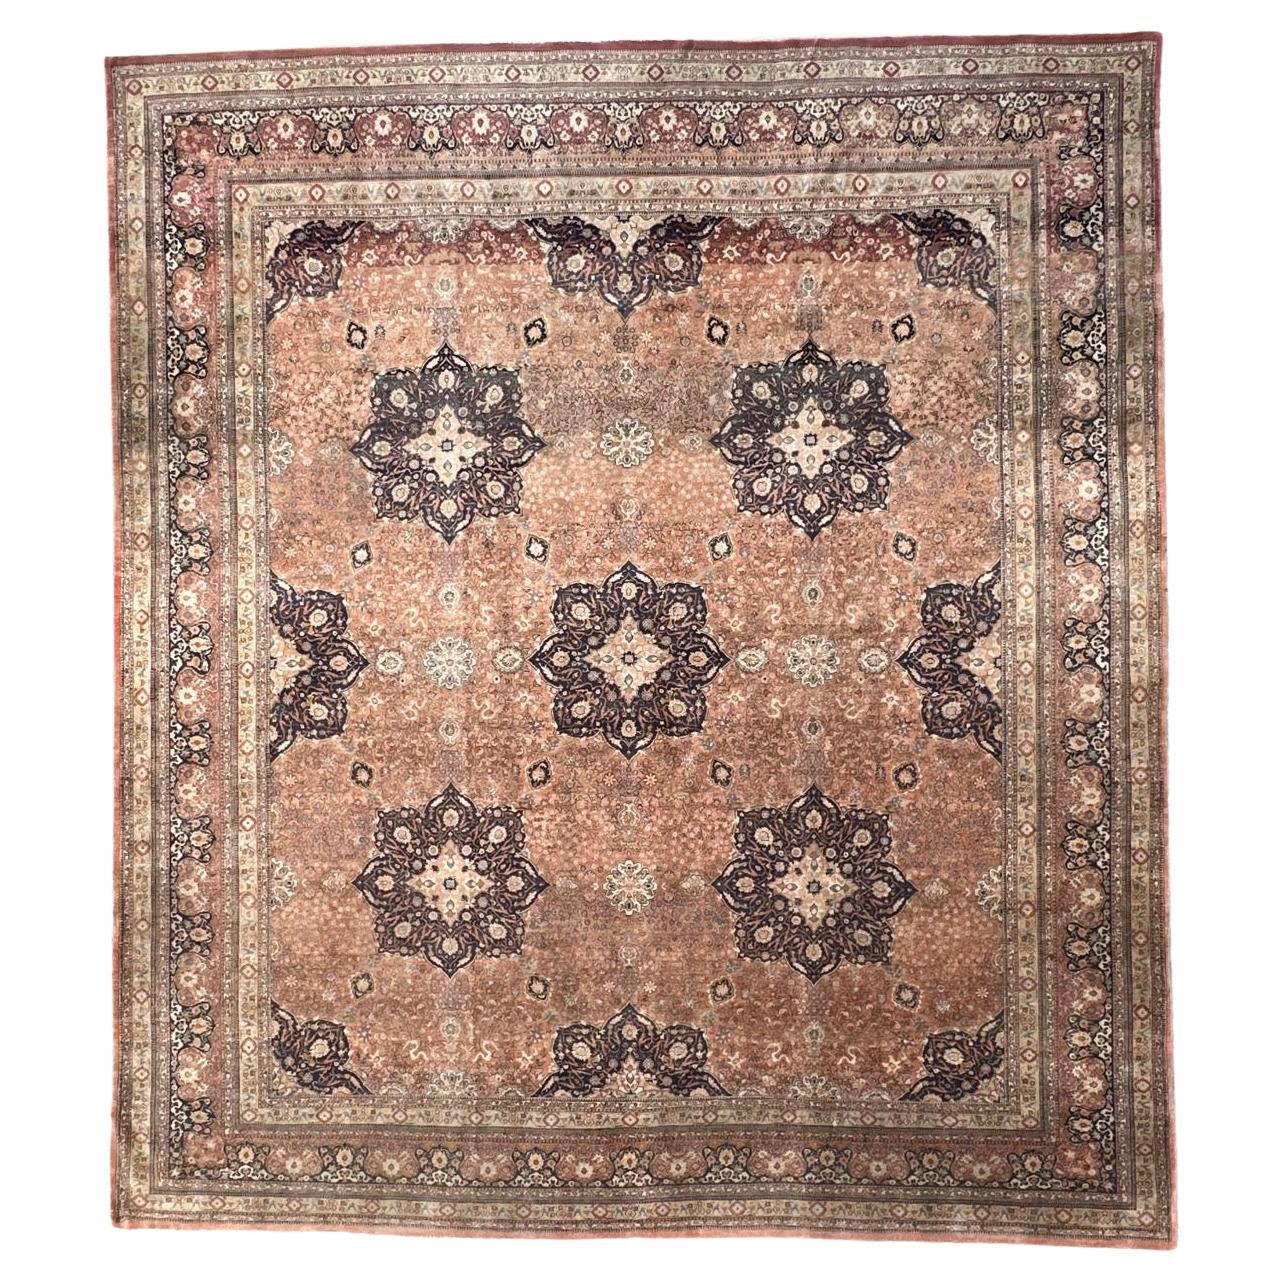 Bobyrug’s Wonderful large antique Turkish fine sivas rug  For Sale